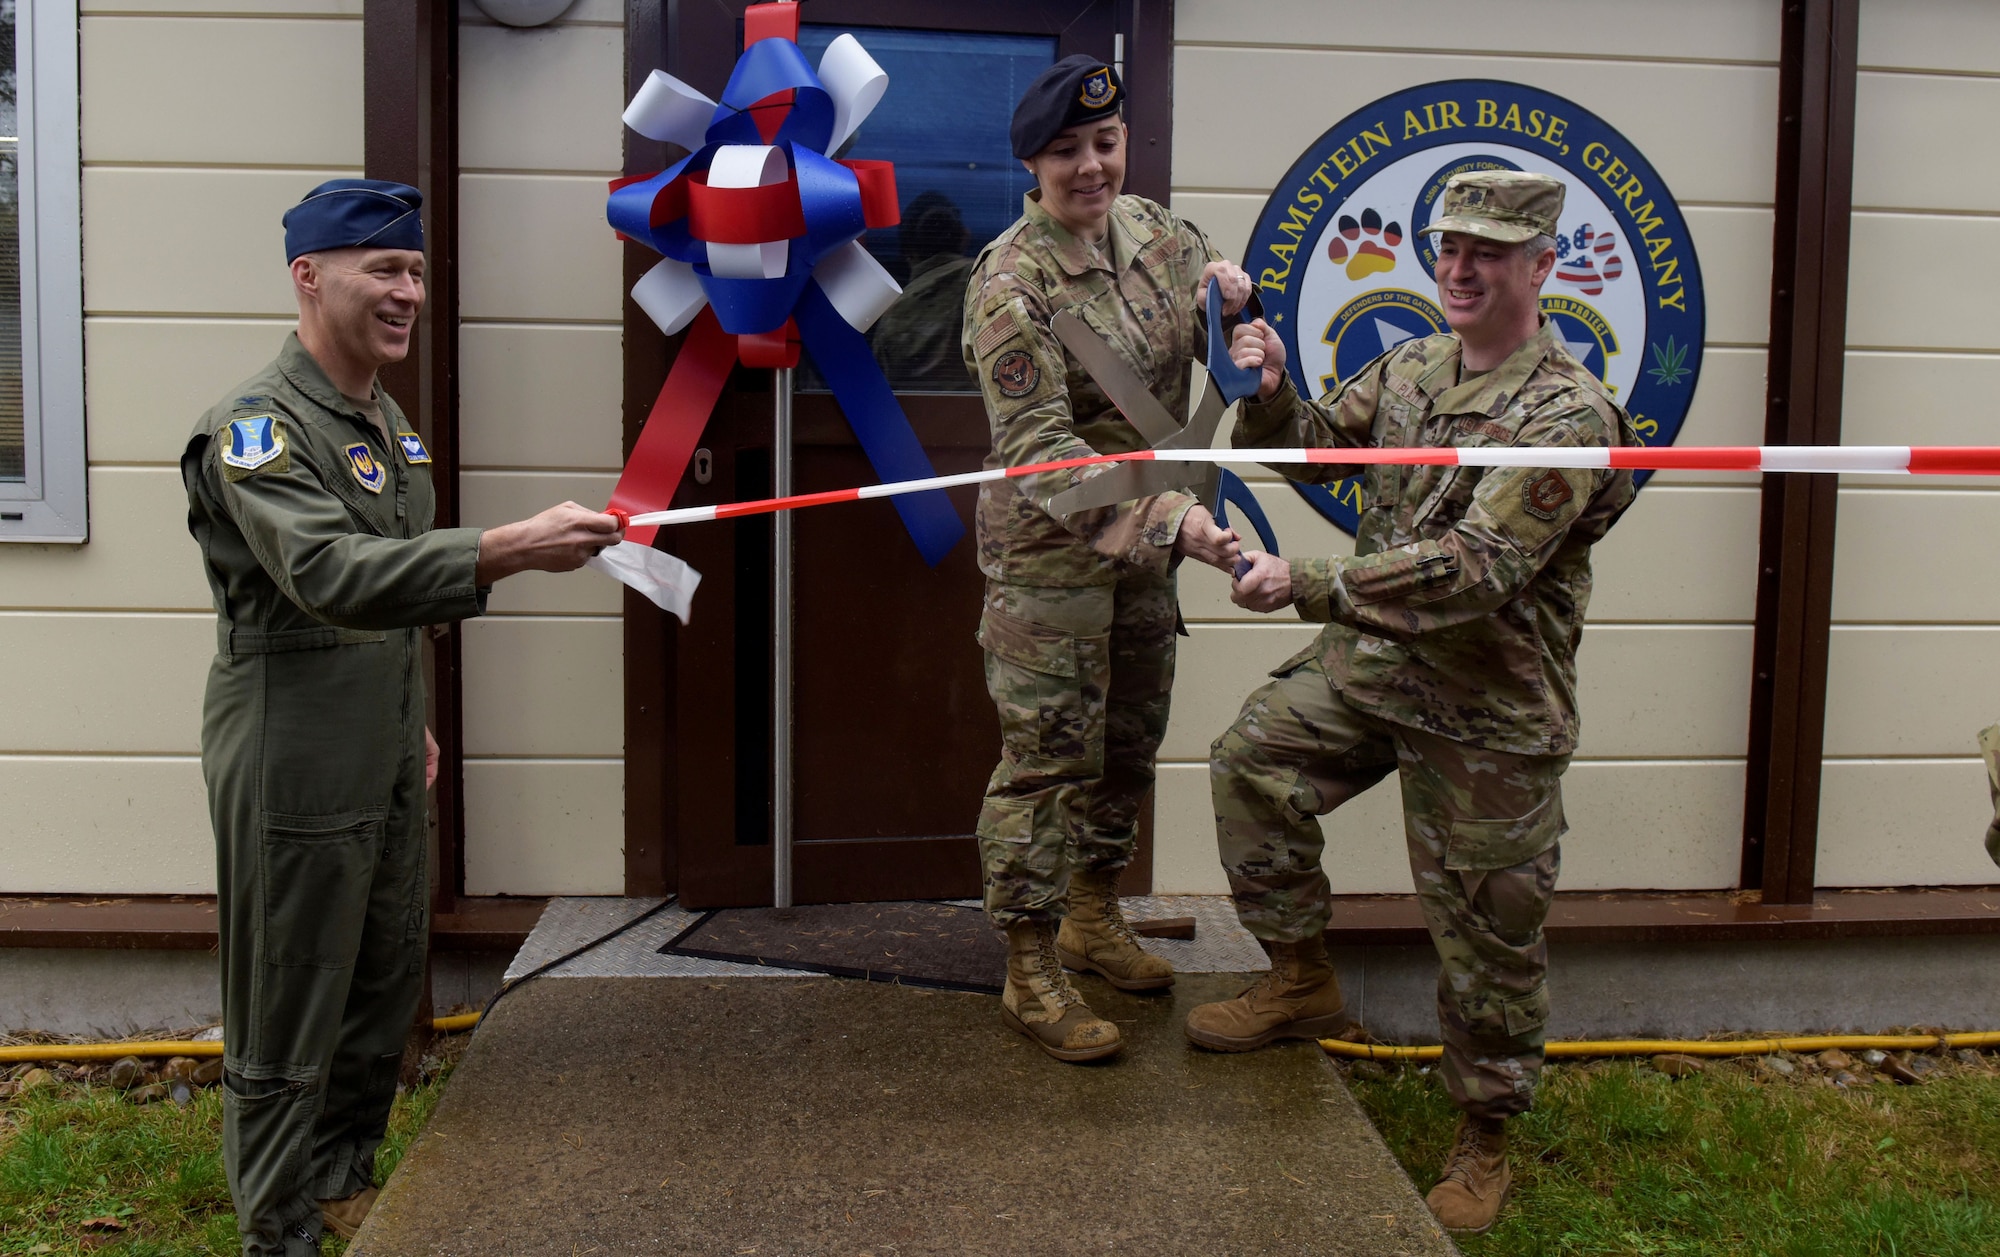 U.S. Air Force Col. Calvin B. Powell, Lt. Col. Cassandra Bates and Lt. Col. Seth Pratt cut the ribbon at a ribbon-cutting ceremony